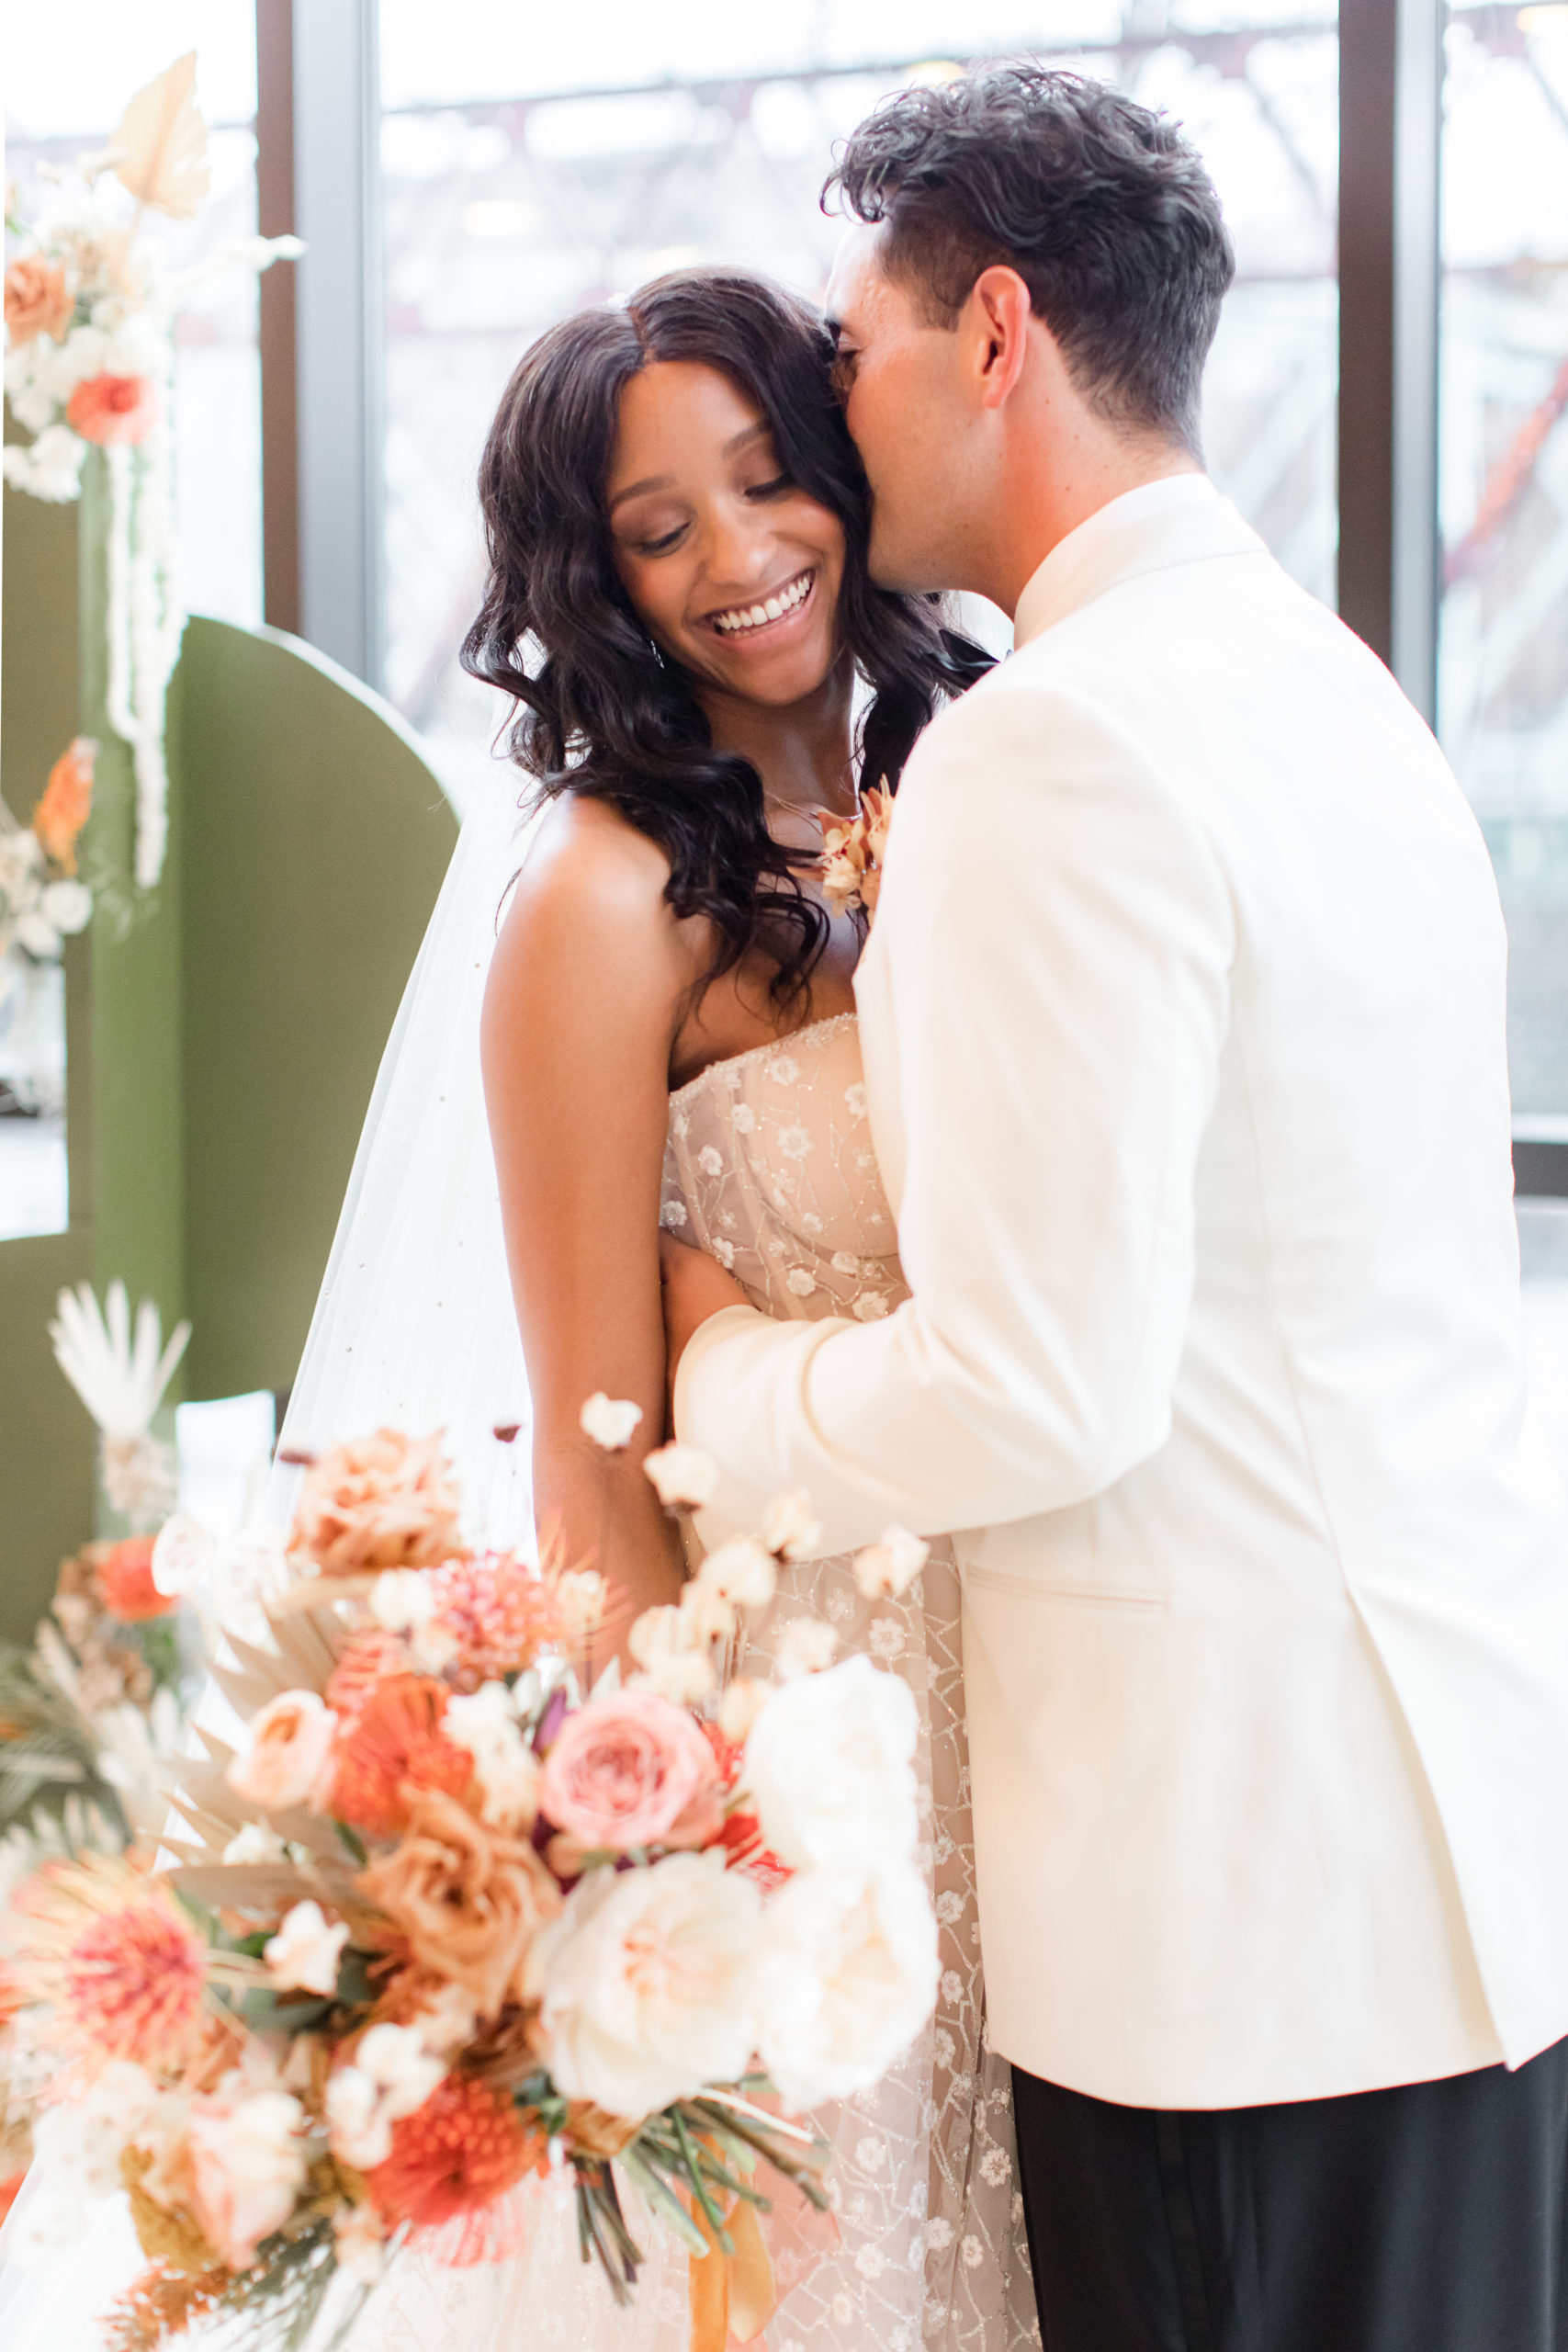 groom nuzzles bride's ear during wedding photos in Philadelphia PA